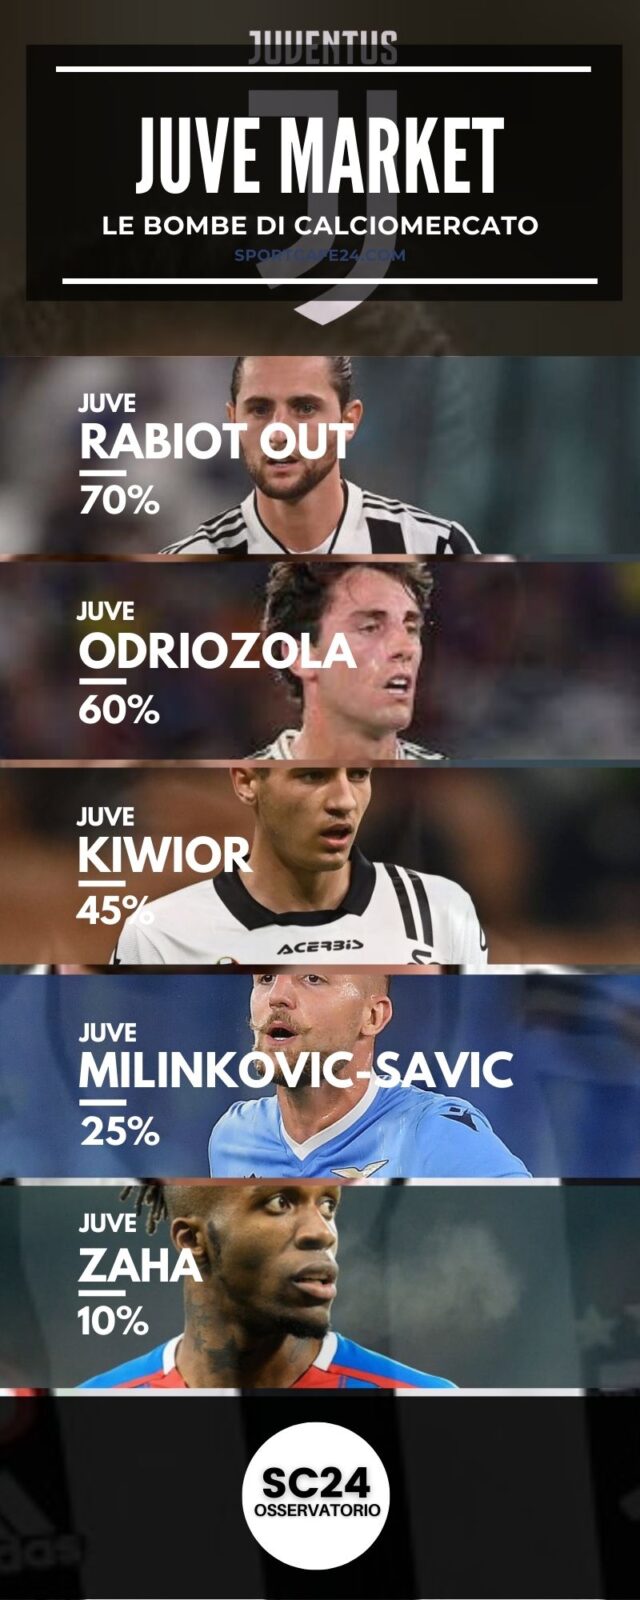 MIlinkovic-Savic può veramente sbarcare alla Juventus?